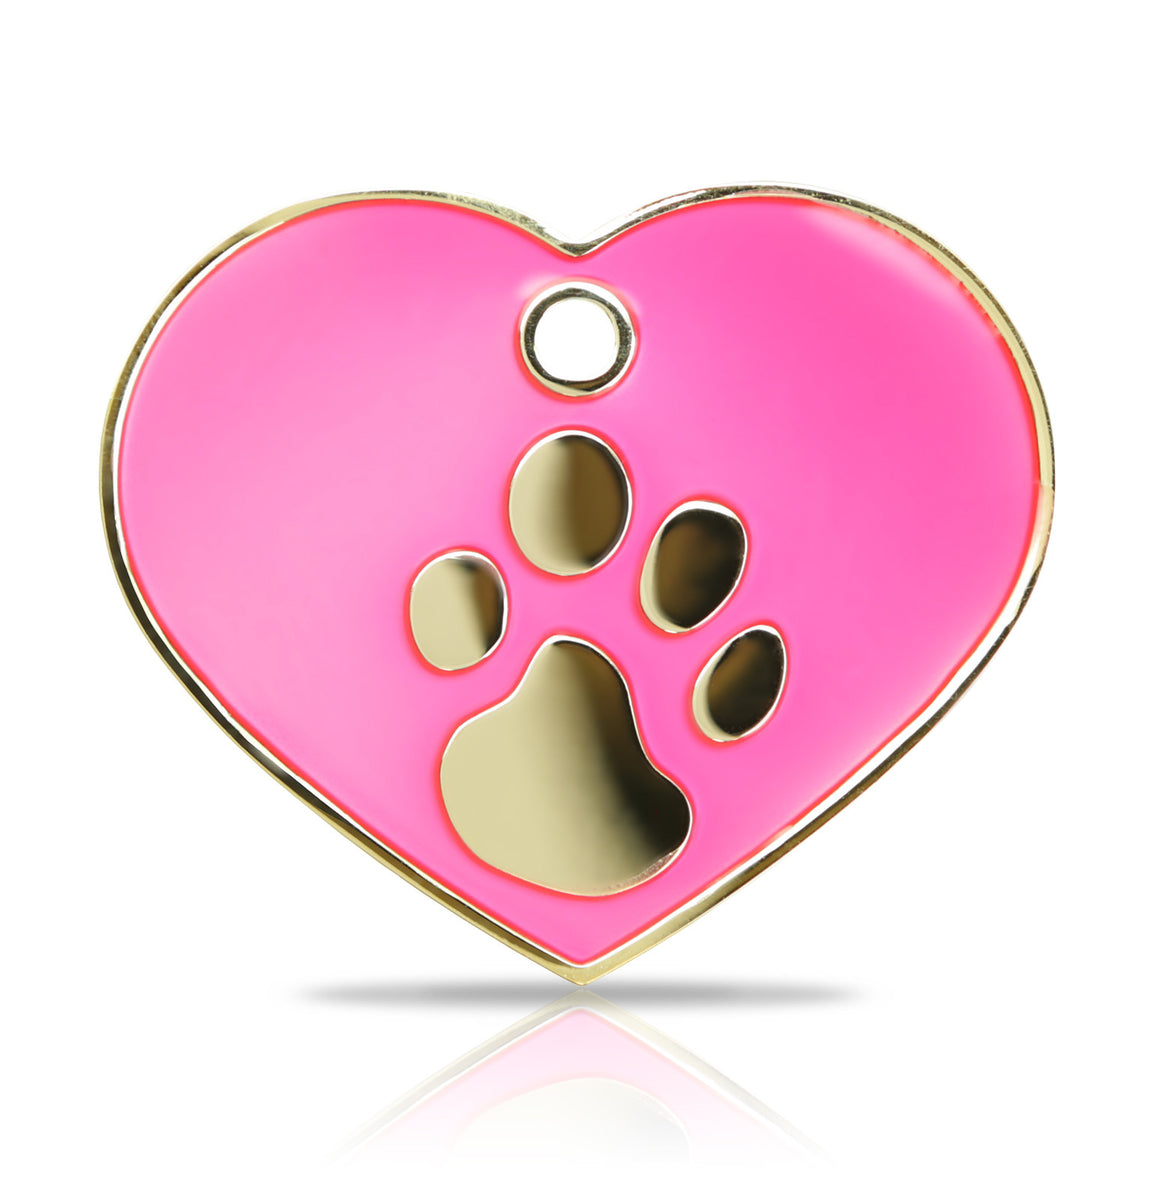 TaggIT Elegance Large Heart Pink & Gold iMarc Pet Tag